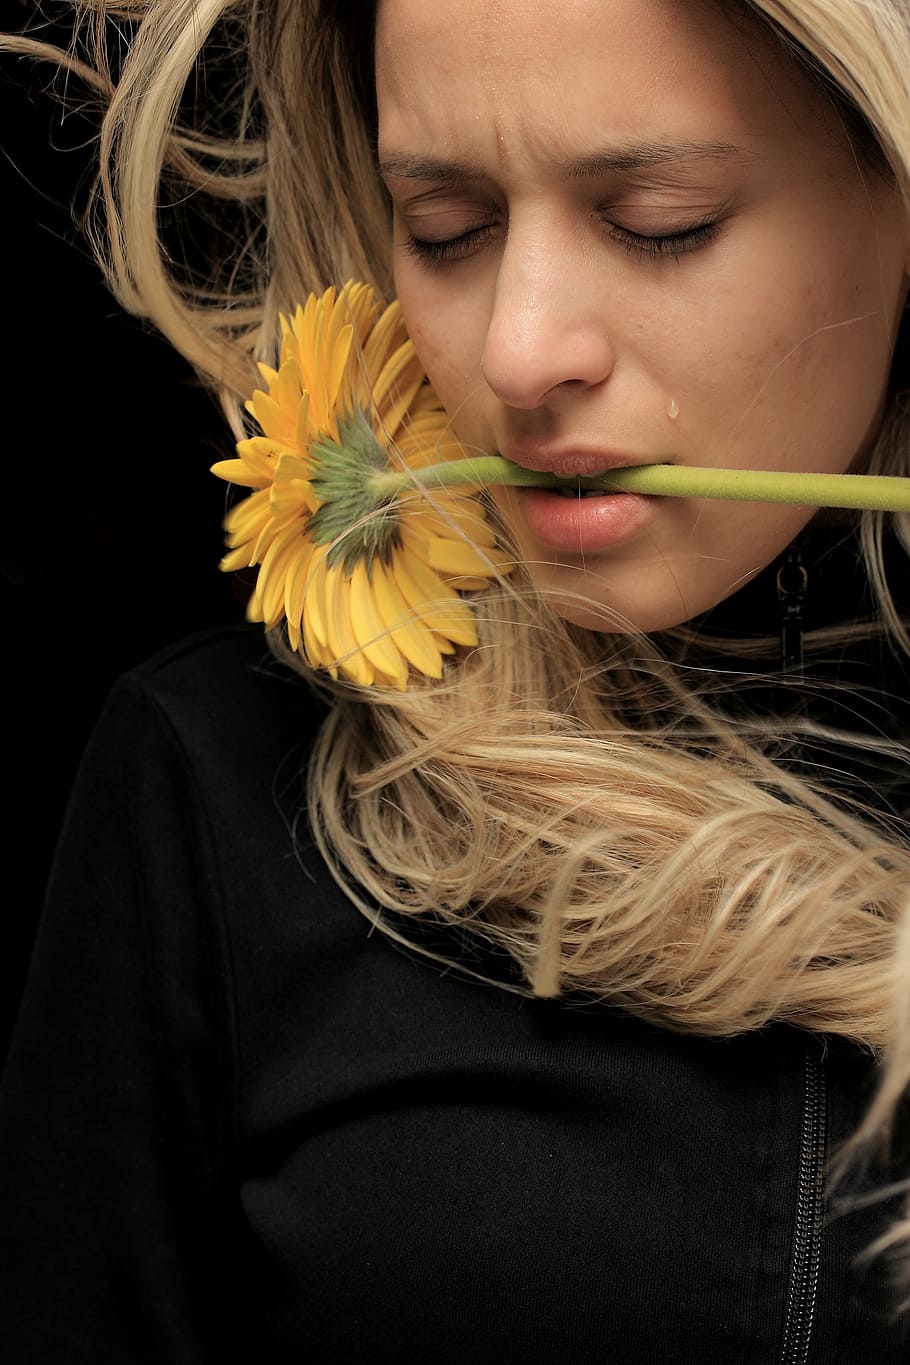 woman, wearing, black, zip-up, top, biting, yellow, sunflower, flower, model